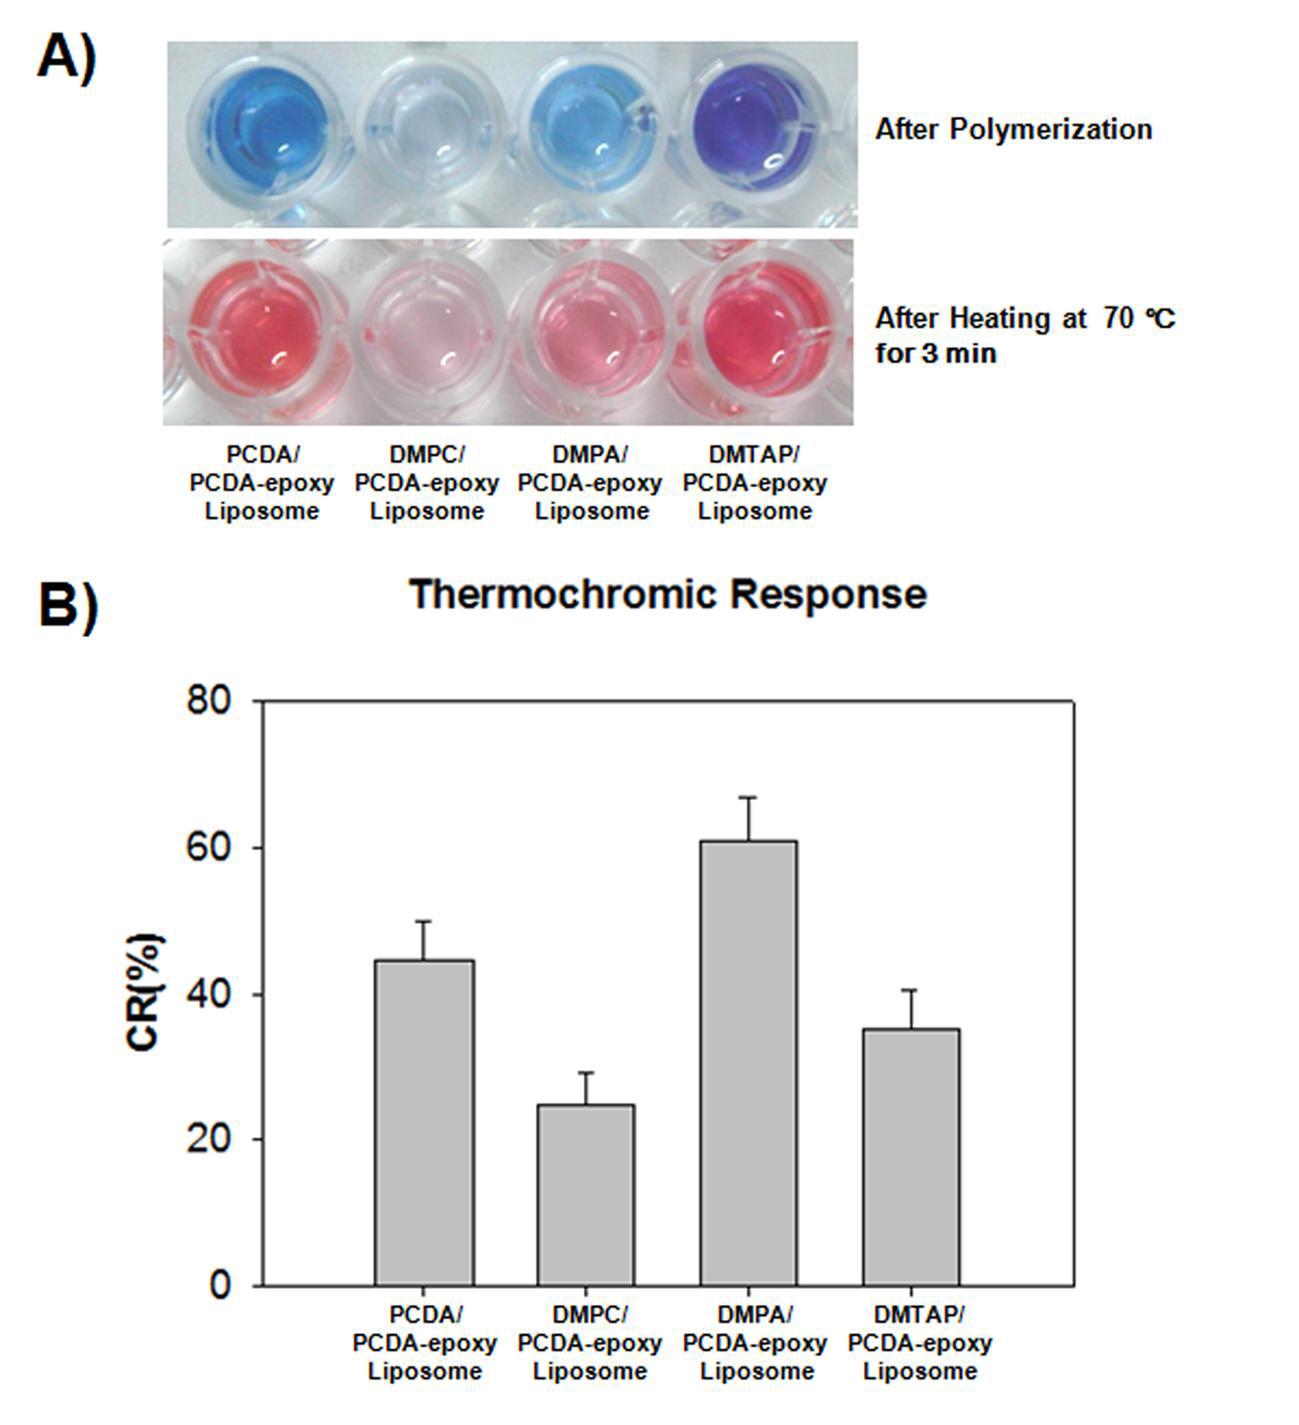 PDA-phospholipid liposome의 polymerization과 열에 대한 감도